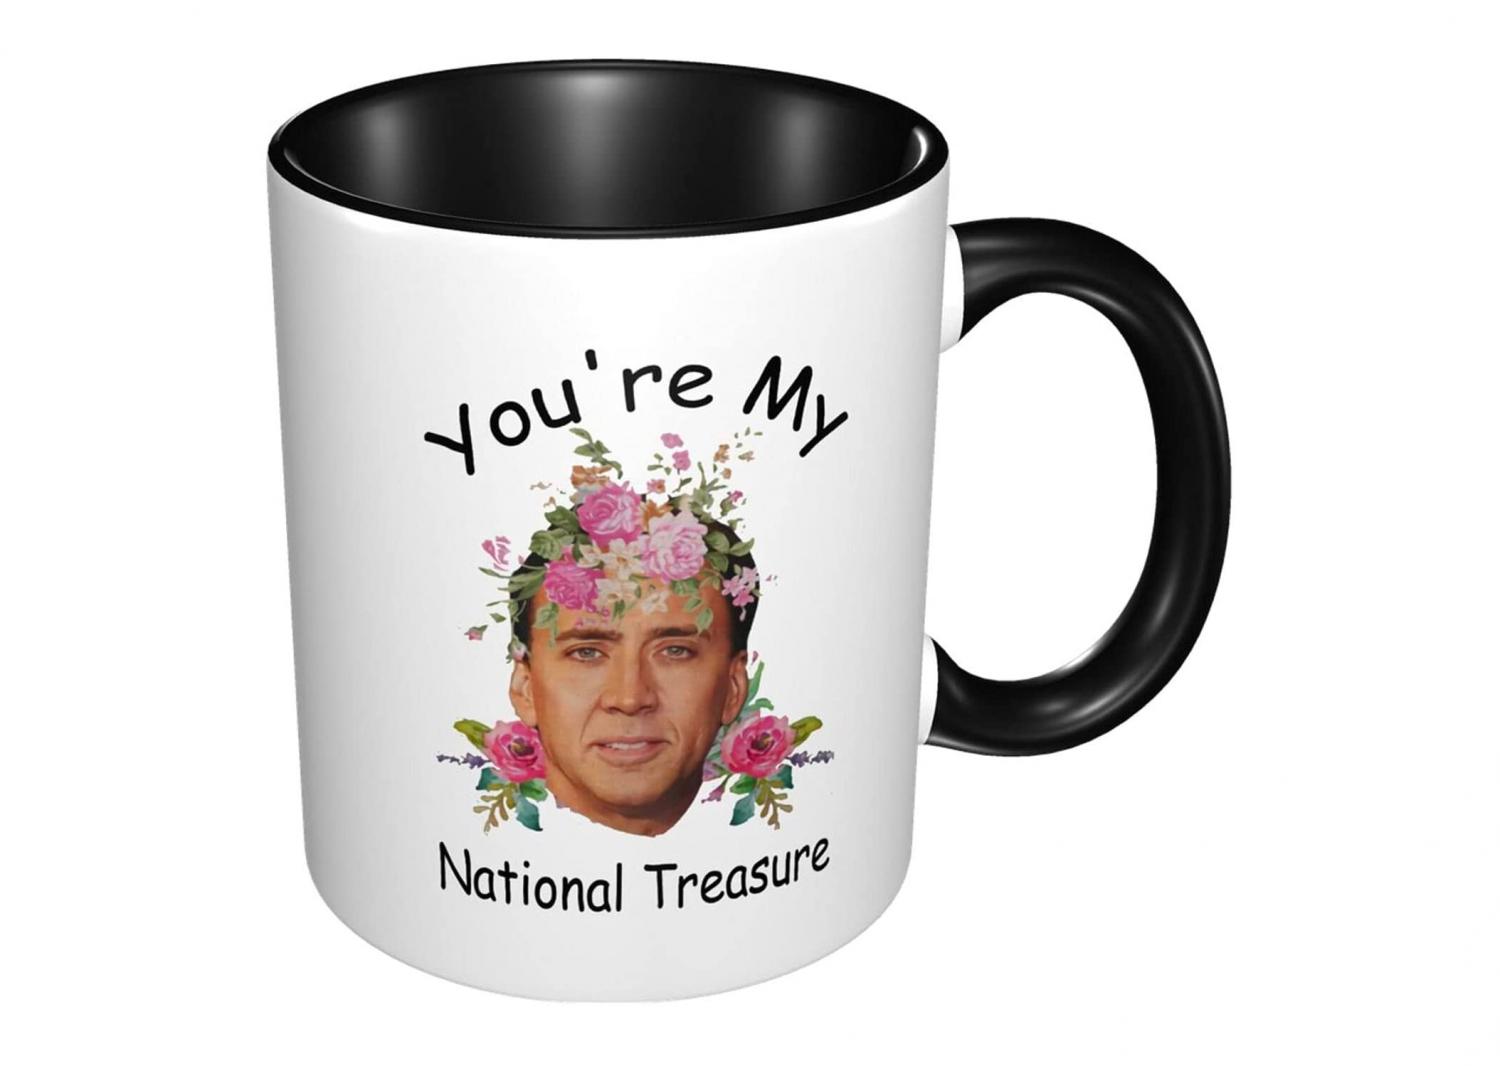 White-colored national treasure nicolas cage mug with black handle